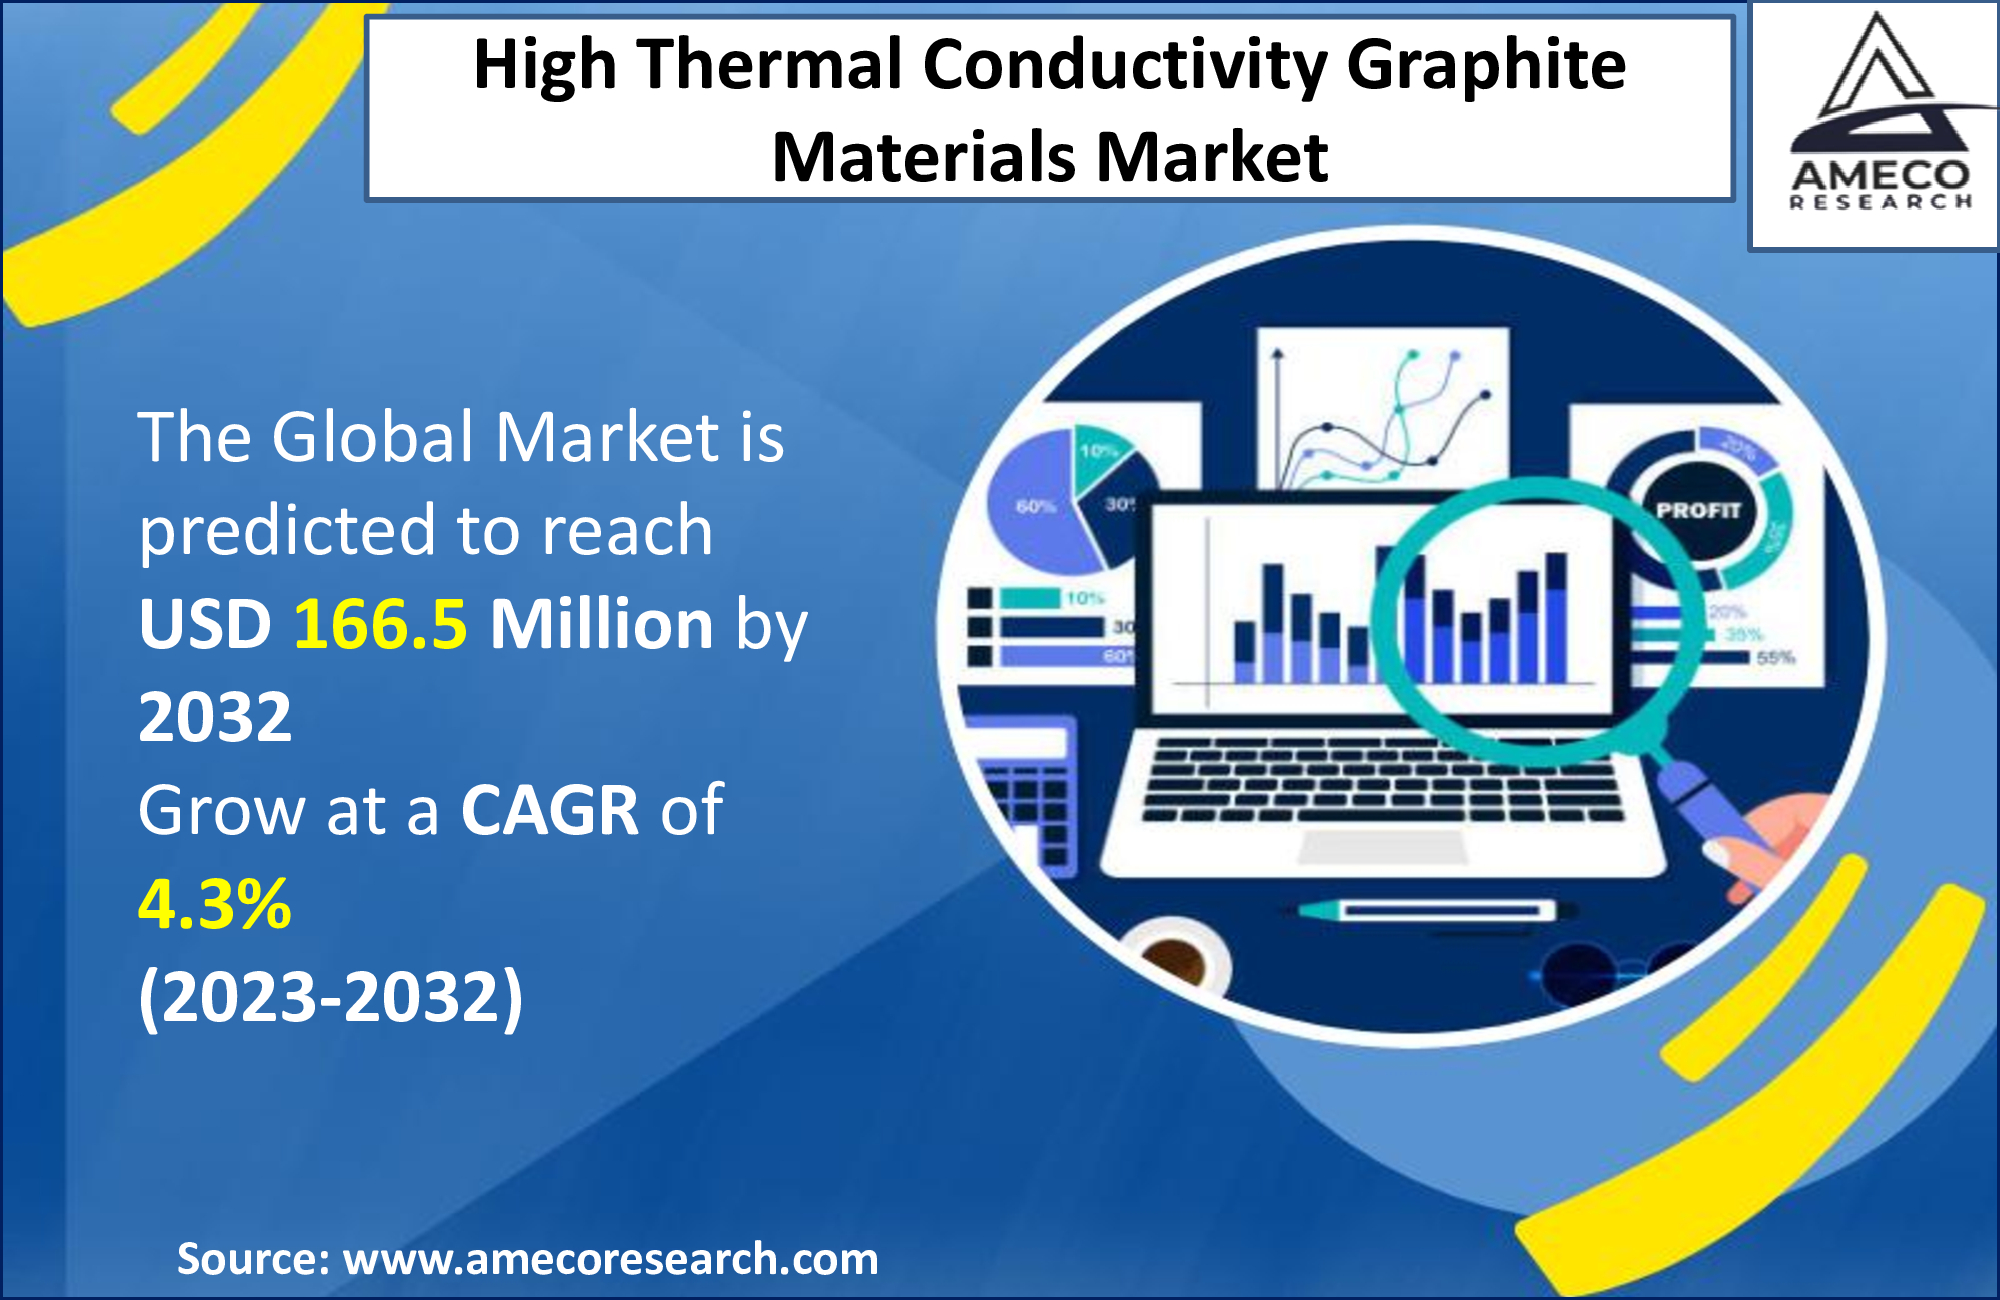 High Thermal Conductivity Graphite Materials Market